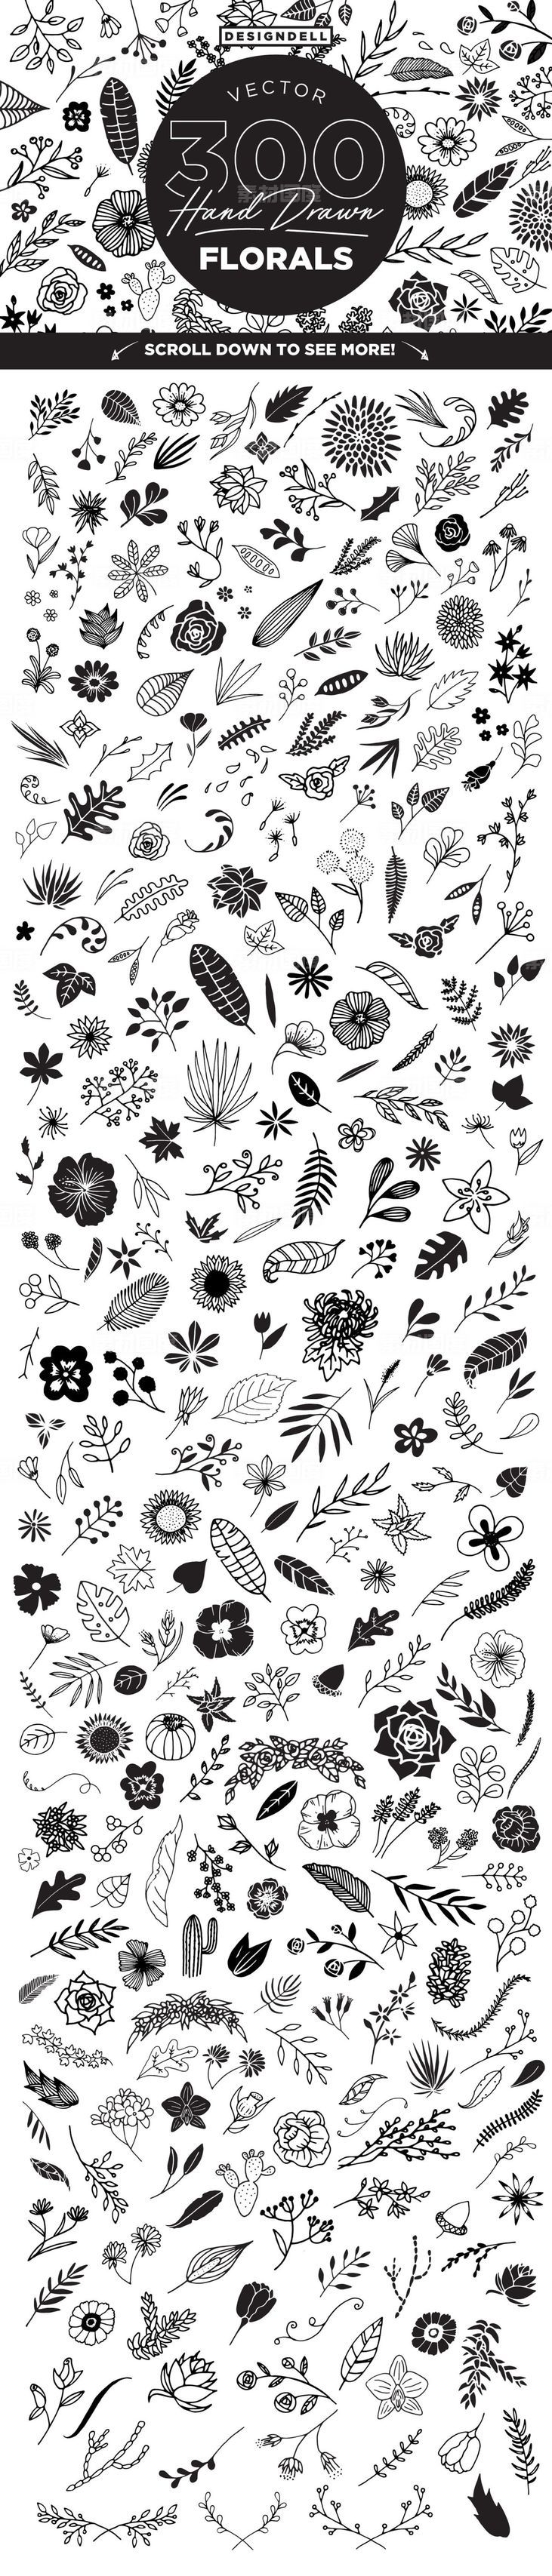 300幅手绘线条艺术风格花卉剪贴画 300 Hand Drawn Florals